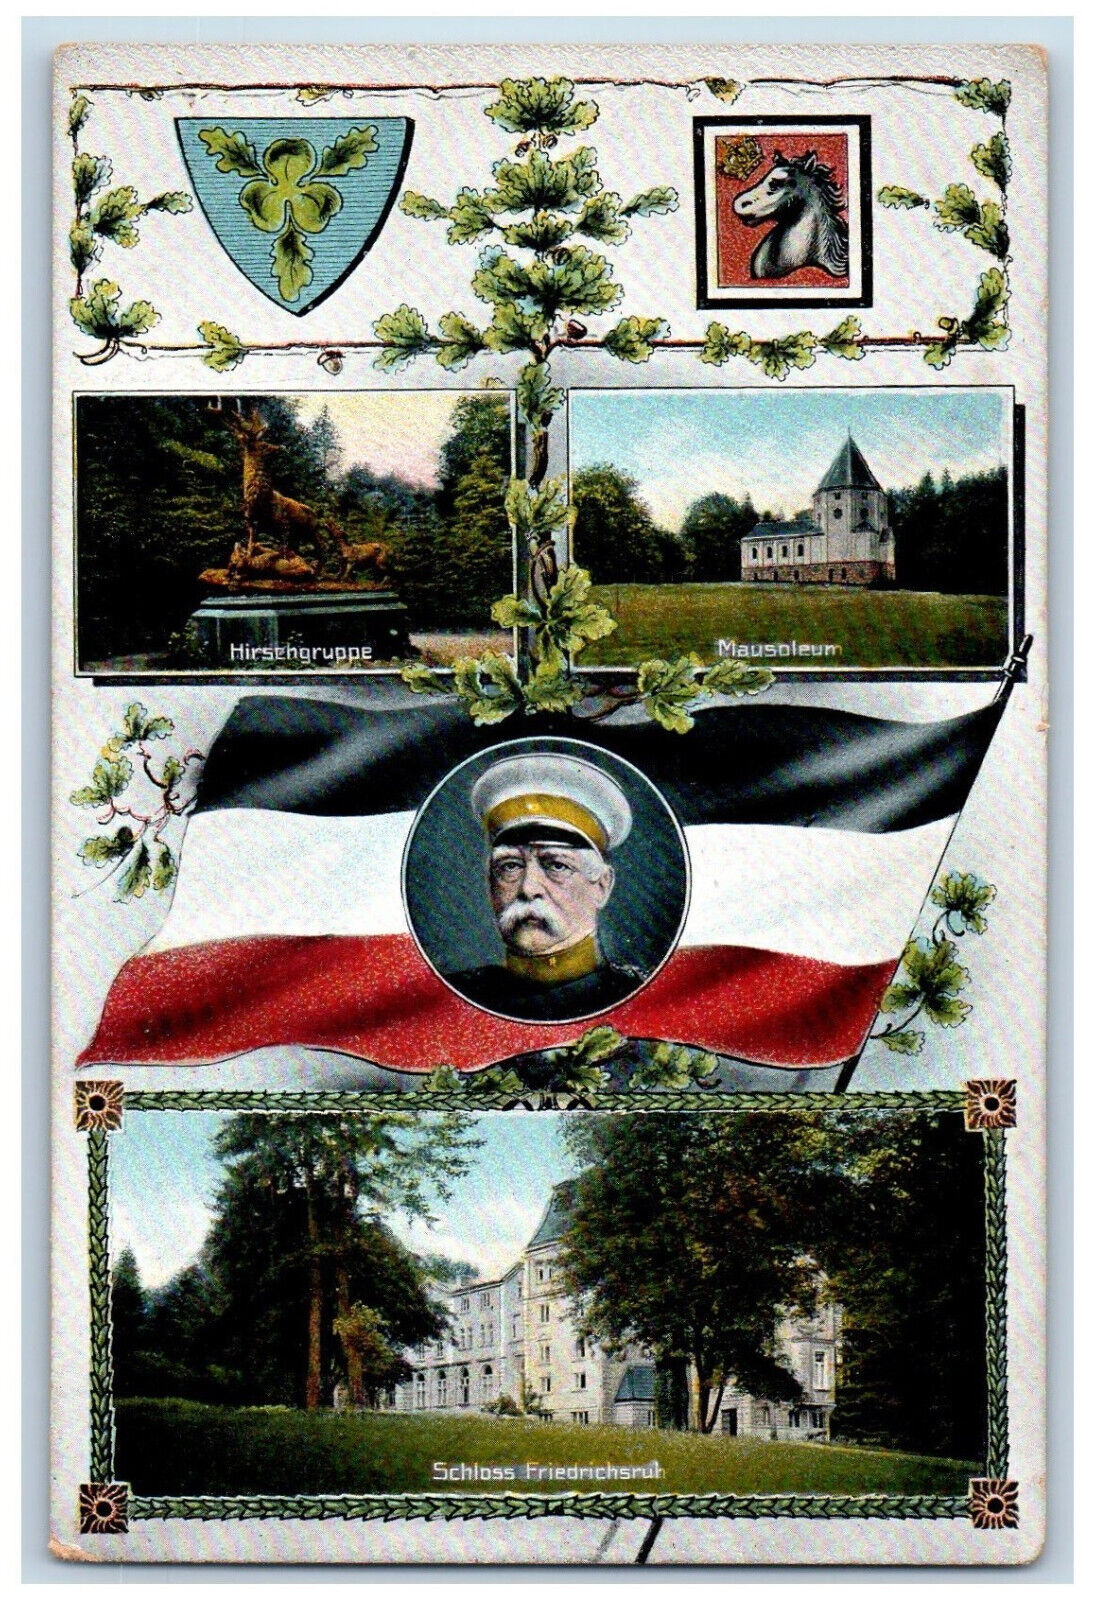 Friedrichsruh Germany Postcard Mausoleo Hirsehgruppe Friedrichsruh Castle c1910